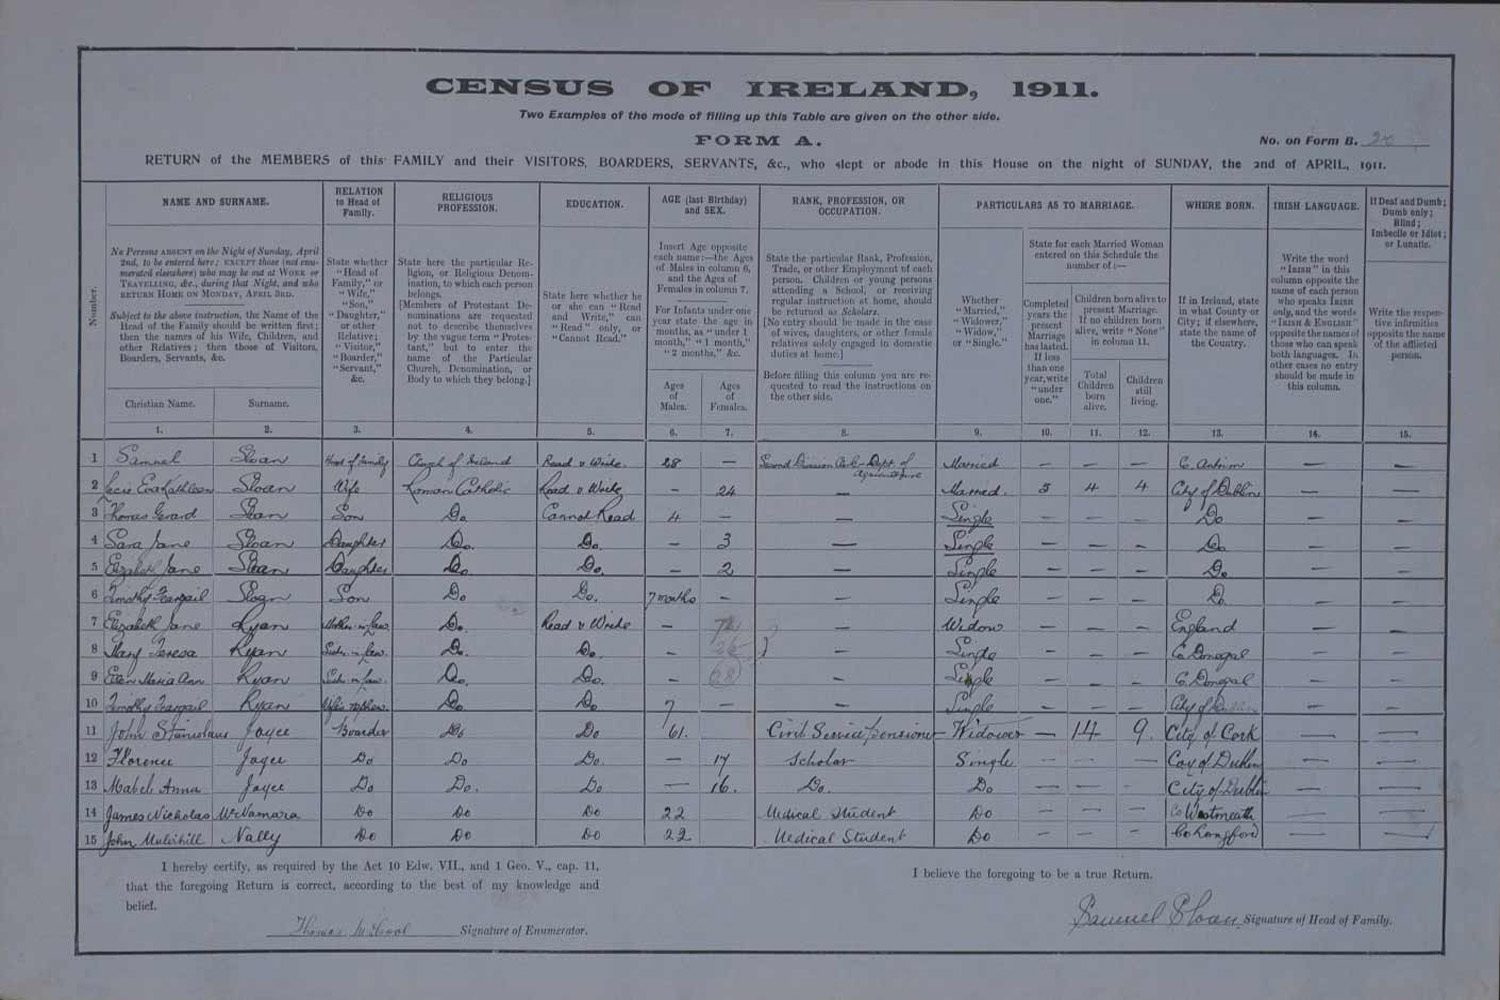 1911 census return for members of the Joyce family